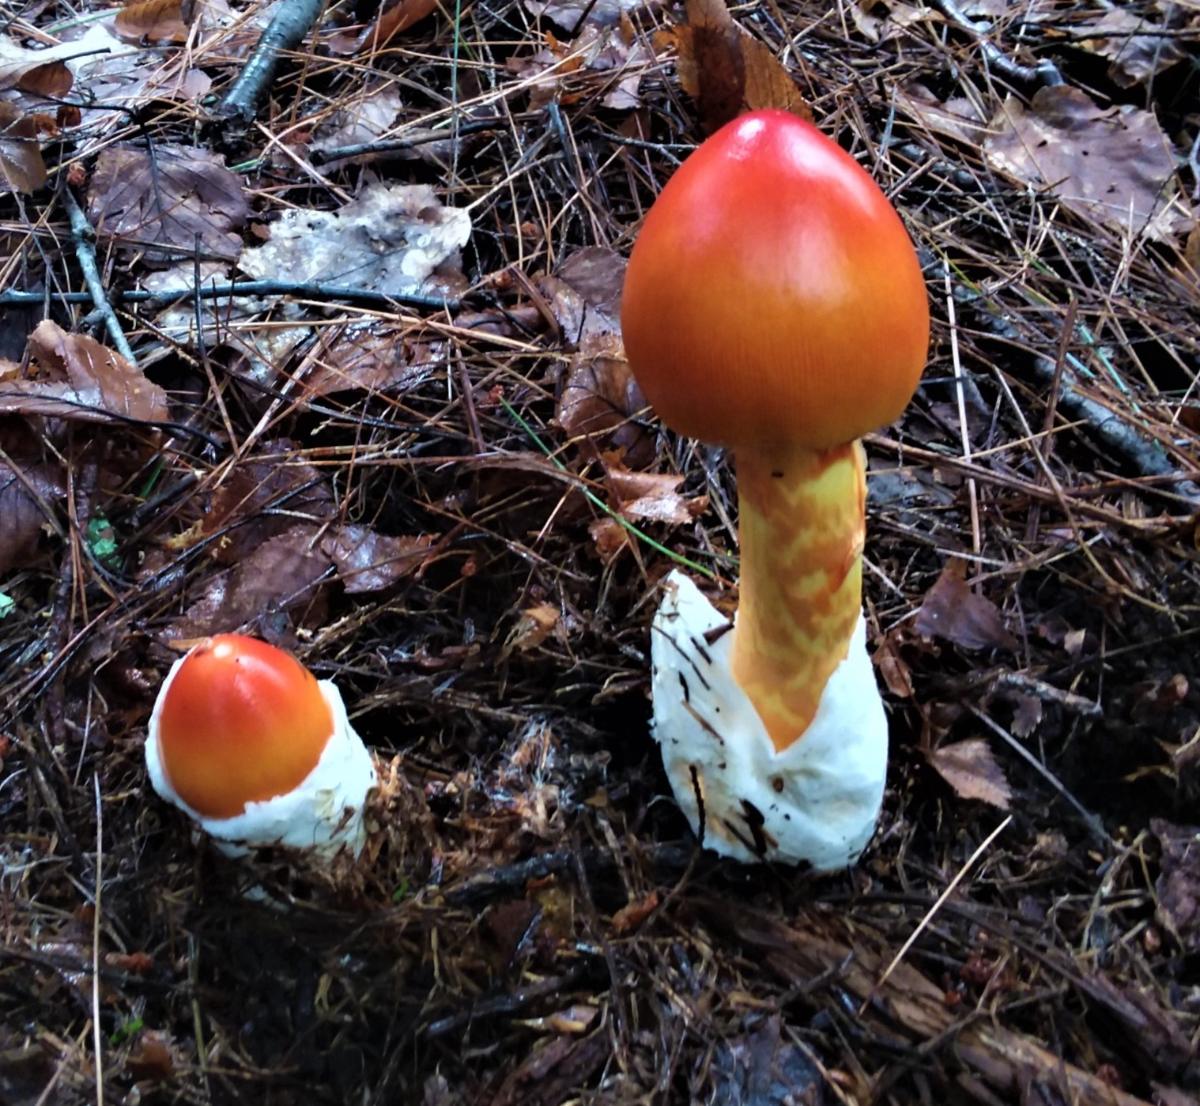 caesar mushrooms in pine and oak habitat
